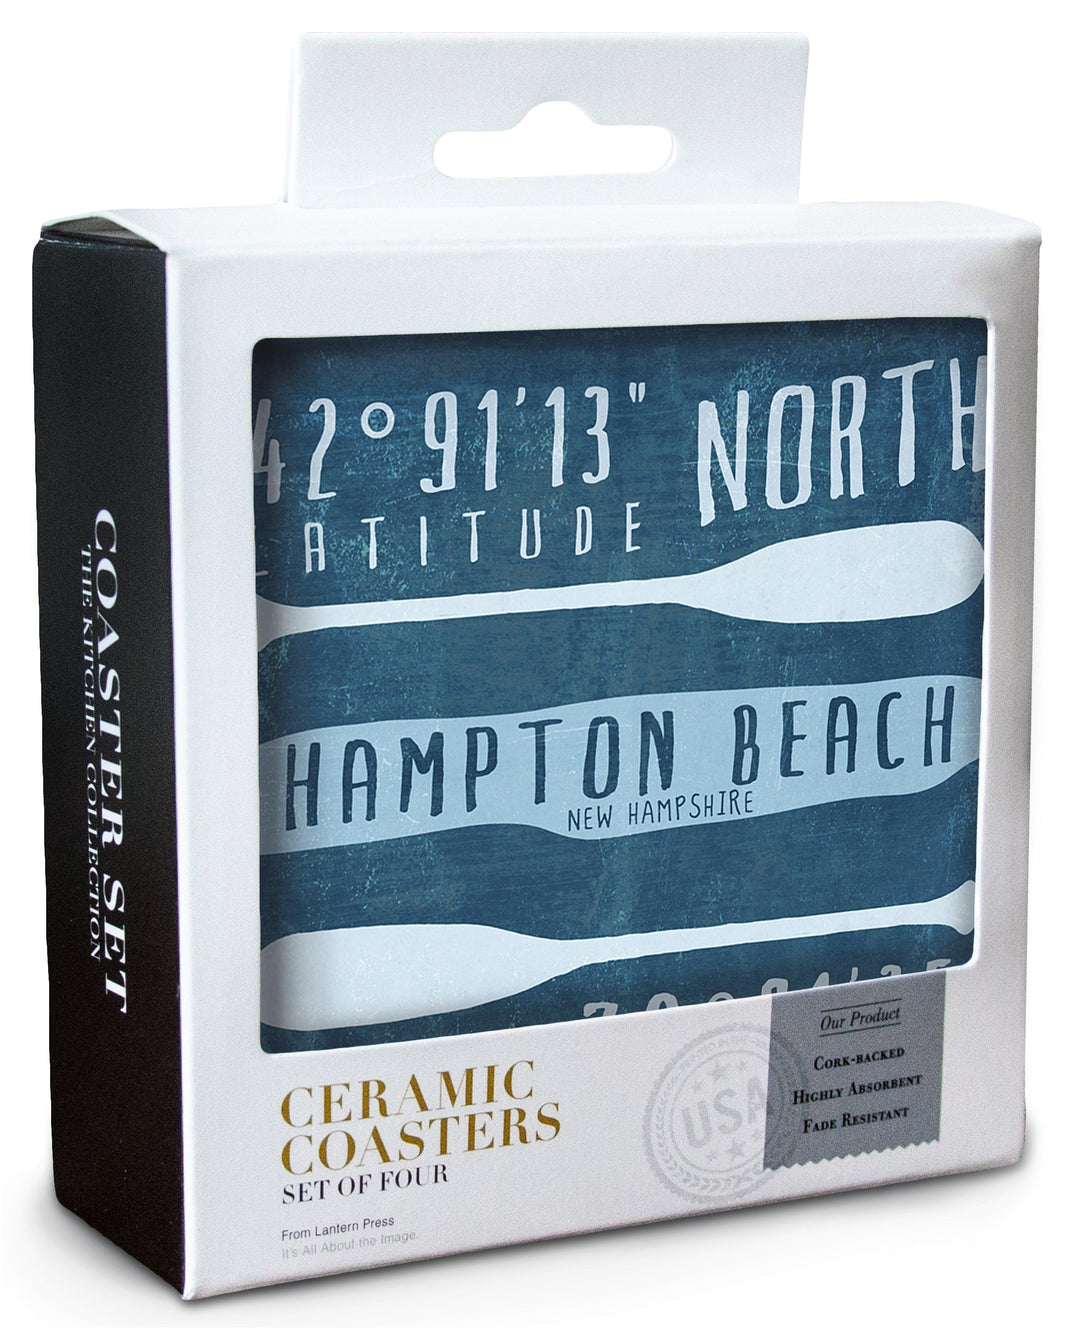 Hampton Beach, New Hampshire, Beach Essentials, Latitude & Longitude, Lantern Press Artwork, Coaster Set Coasters Lantern Press 